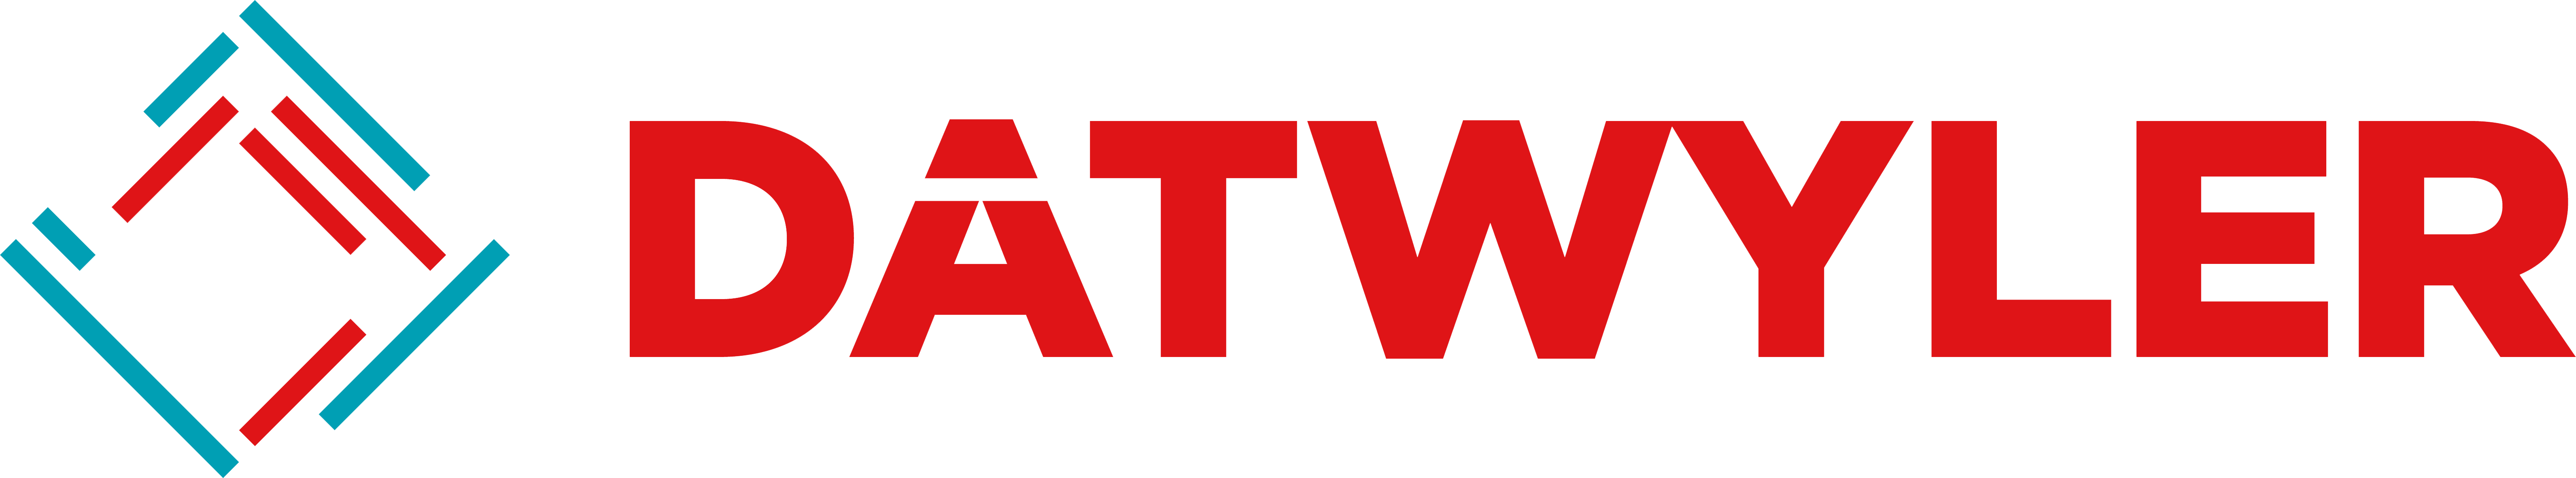 Datwyler_Logo